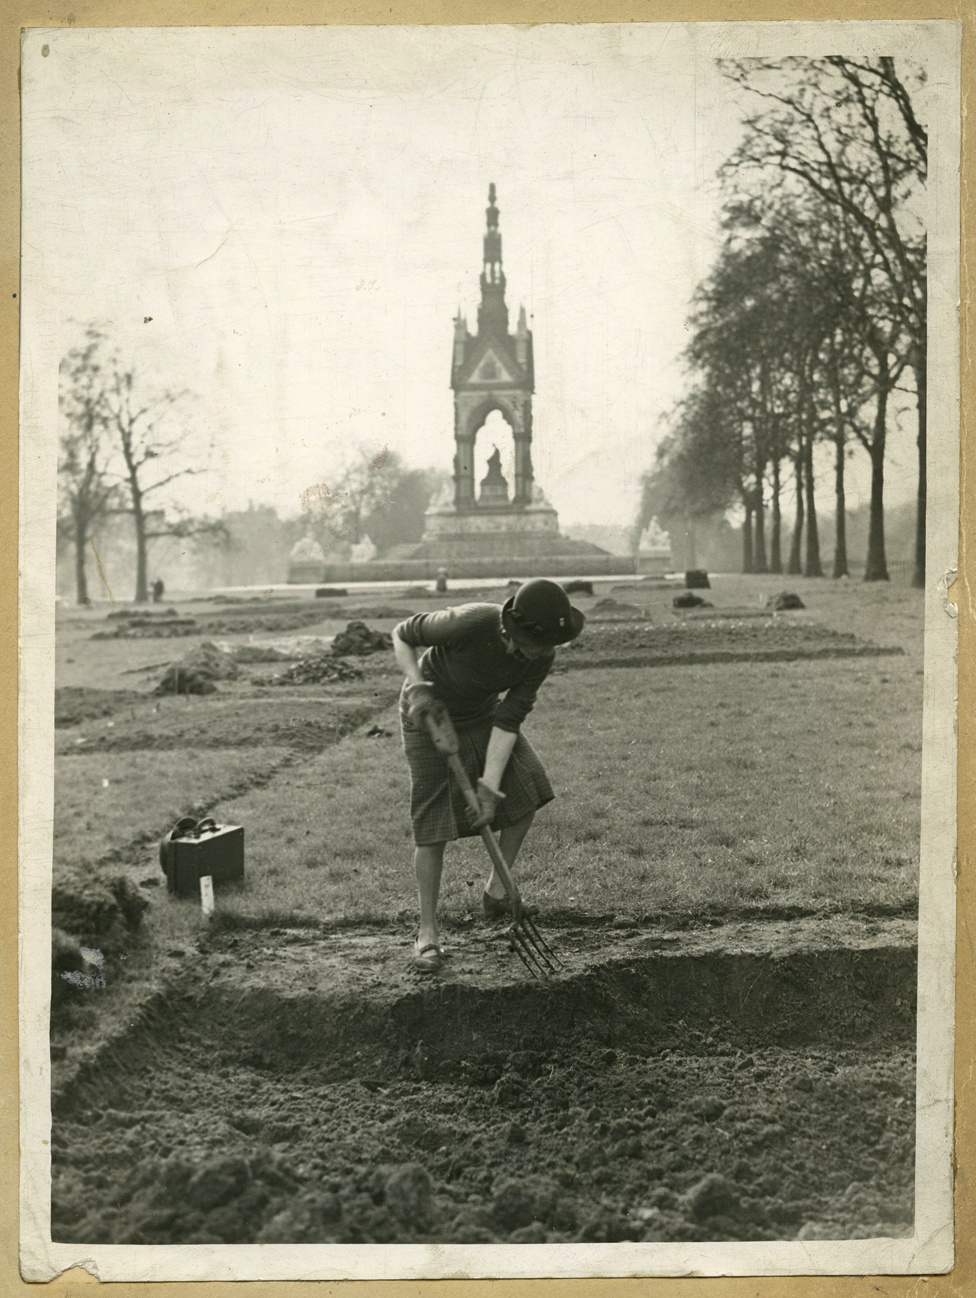 Dulija Makra: &Izabel Bi kopa parcelu, a u pozadini je Albert memorijal u bati Kensington u zapadnom Londonu. Izabel je dola sa mojom tetkom.&/Julia Makra